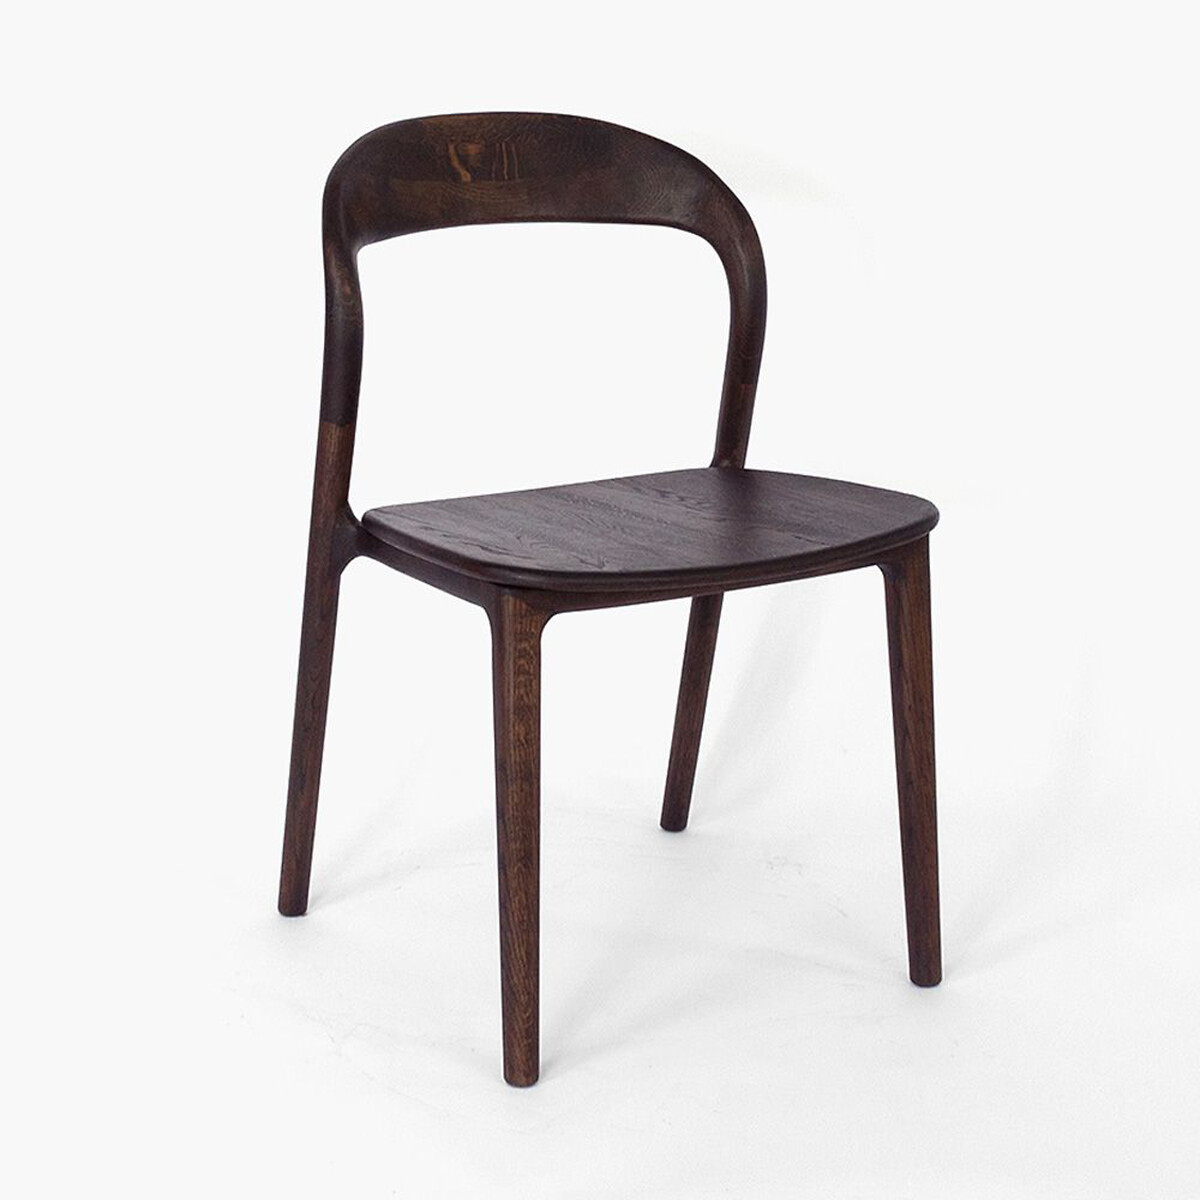 Стул Лугано единый размер каштановый стул morris единый размер каштановый